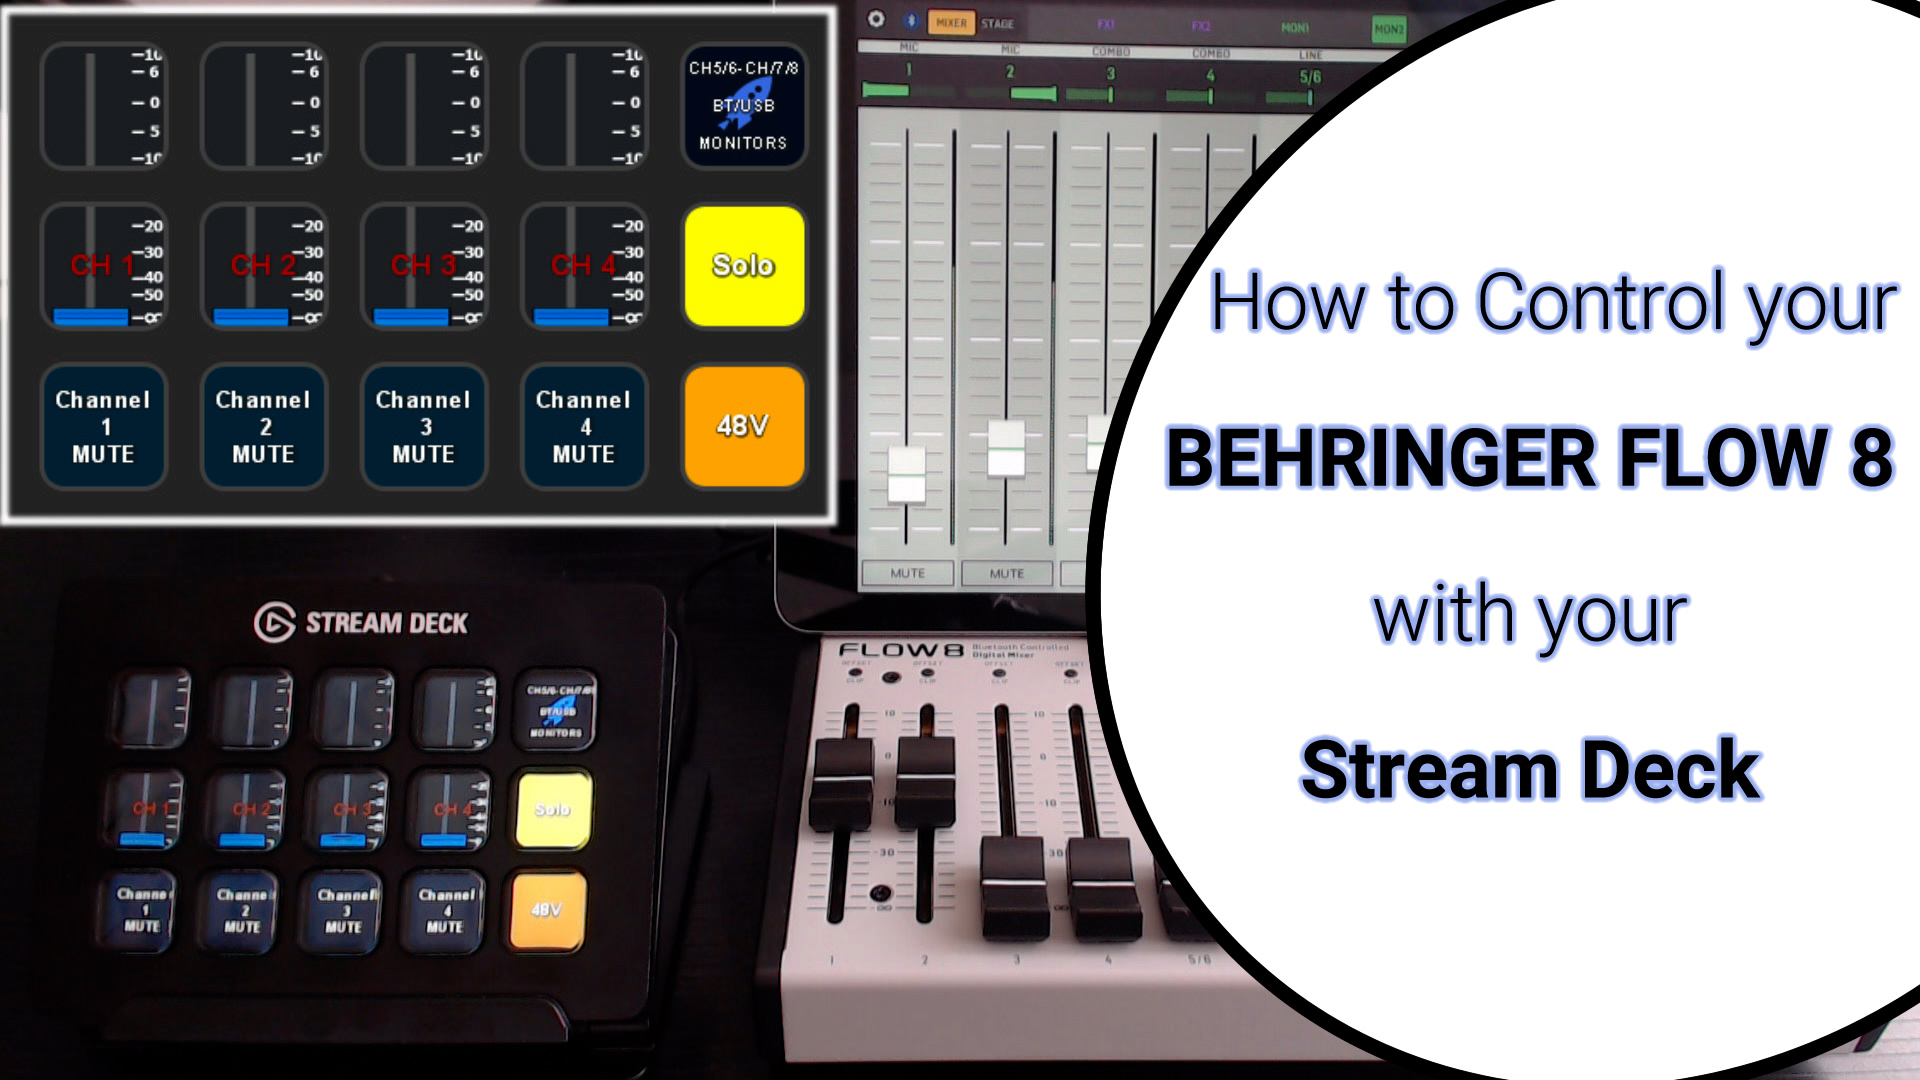 Control your Behringer Flow 8 With Stream Deck - Controla tu #behringe ...